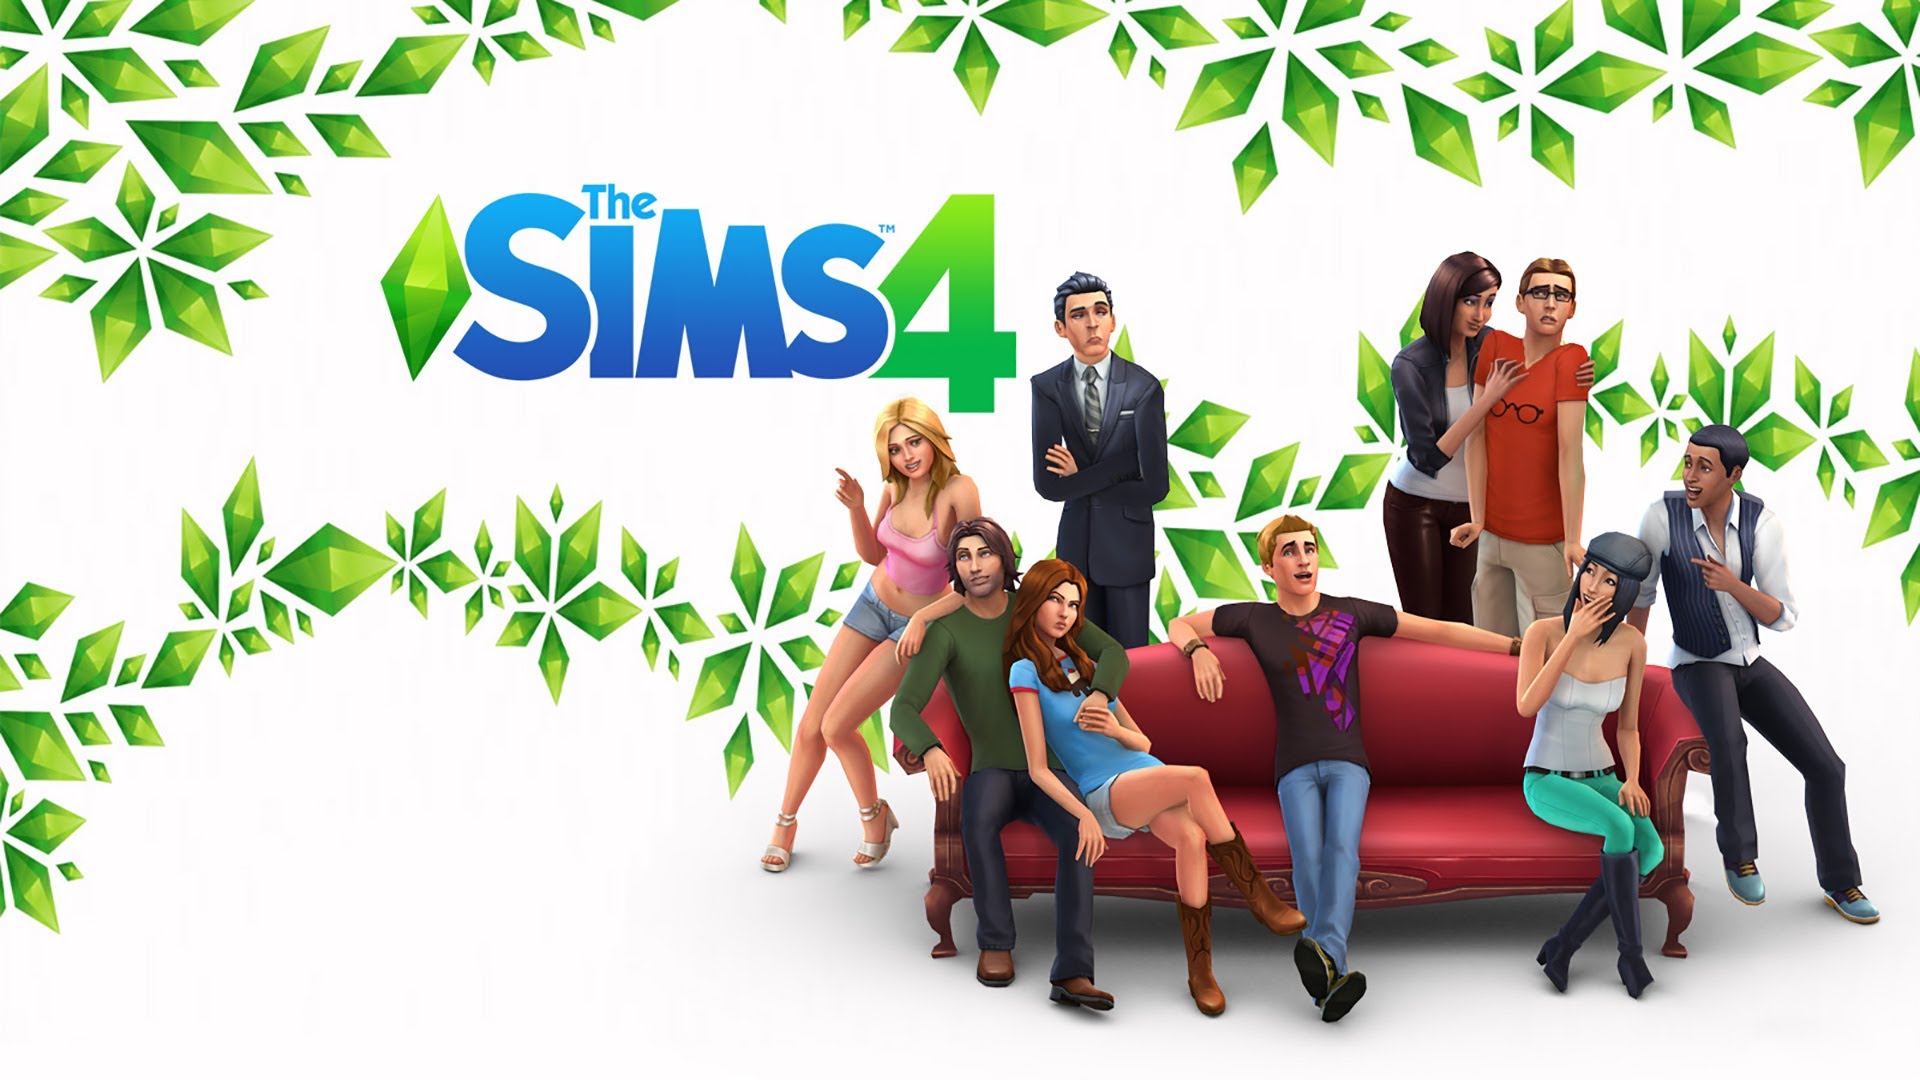 The Sims 4 Review 2020 Godisageek Com